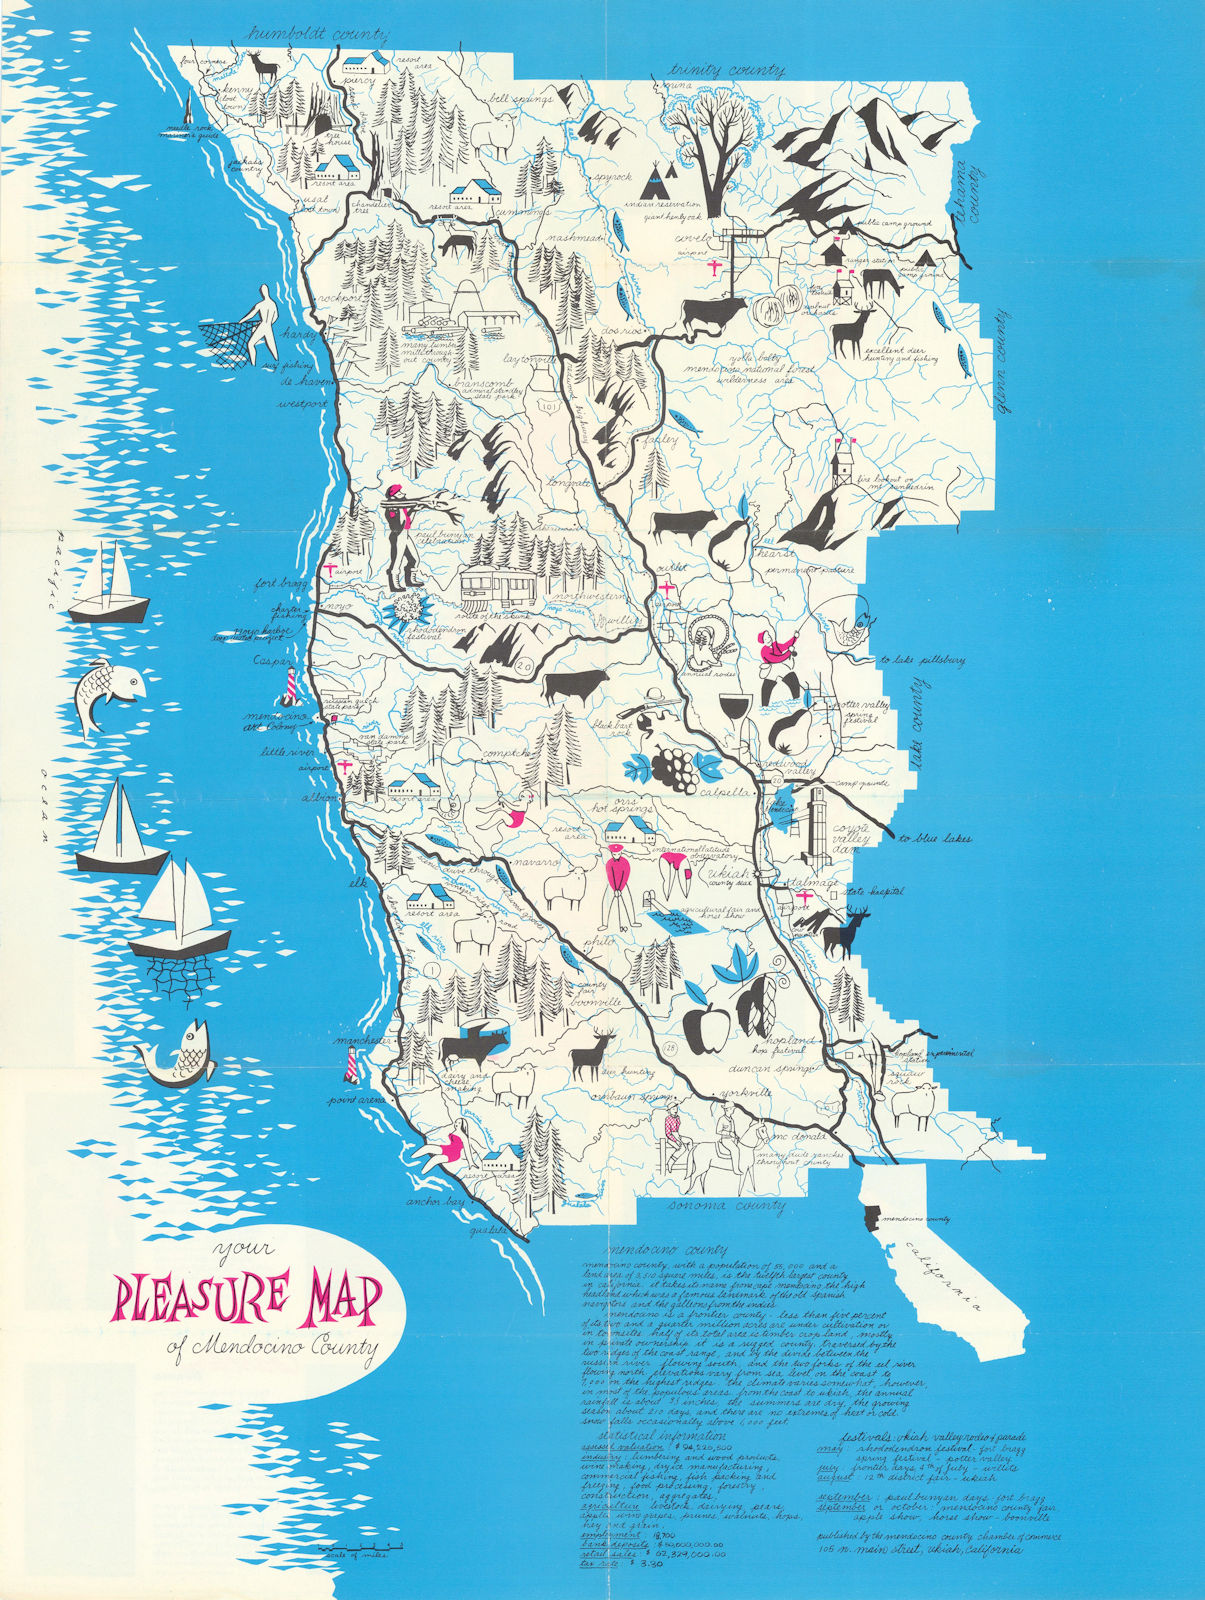 Pictorial tourist "Pleasure map of Mendocino County", California. 24"x18" c1960